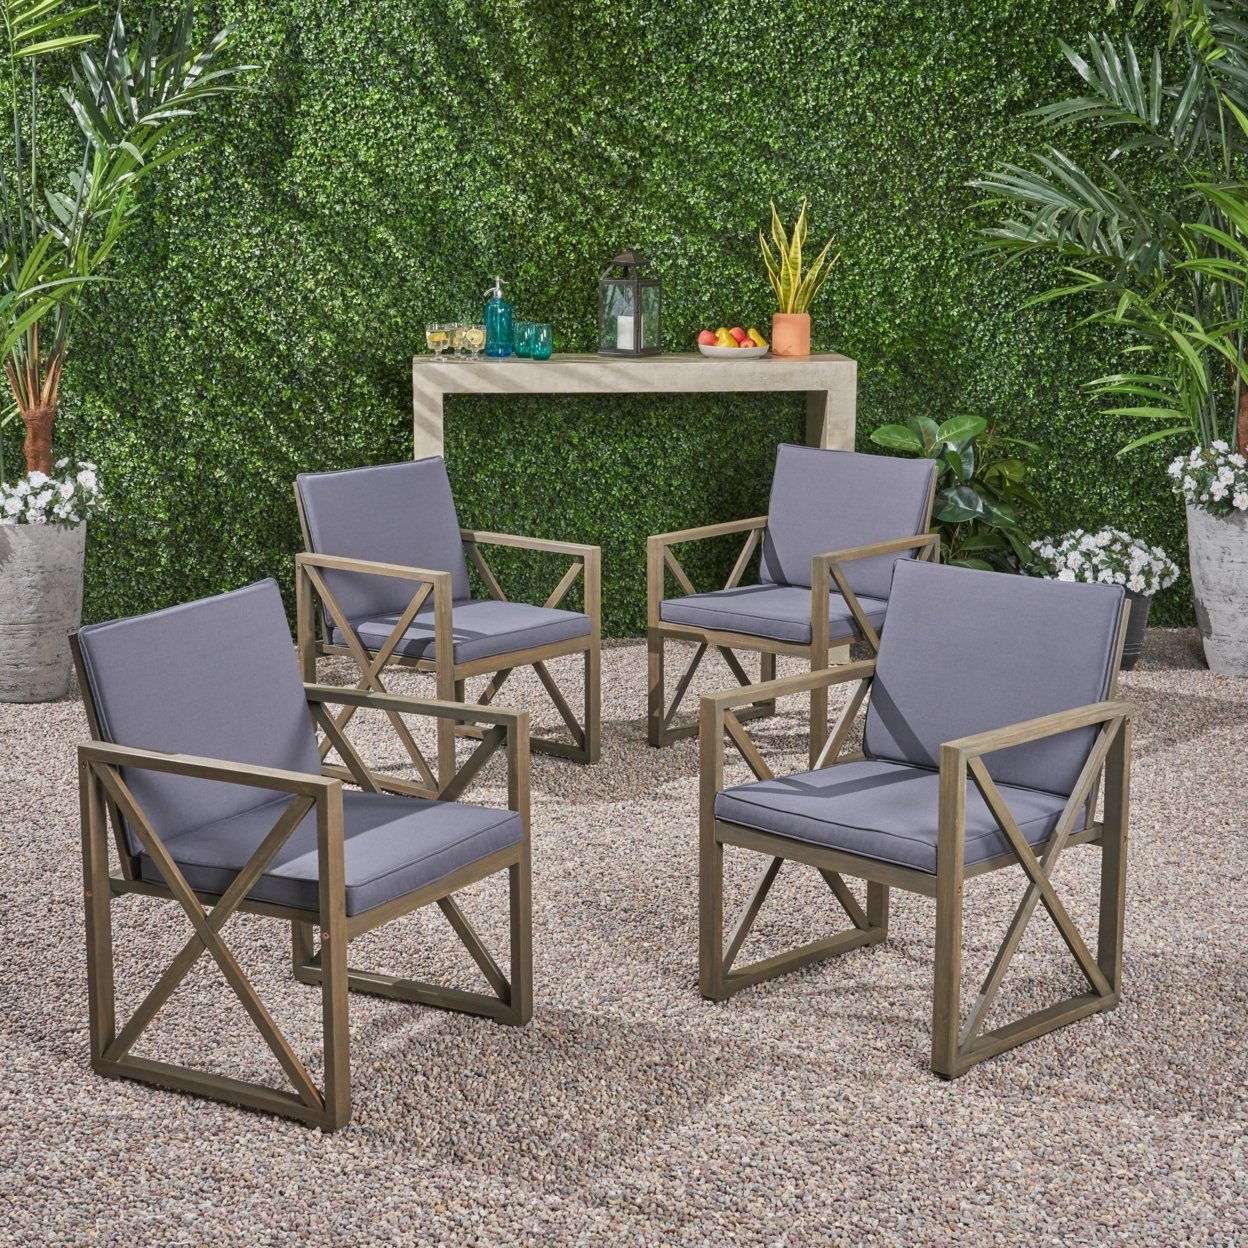 Hazel Outdoor Acacia Wood Club Chairs With Cushions - Gray / Dark Gray, Set Of 2